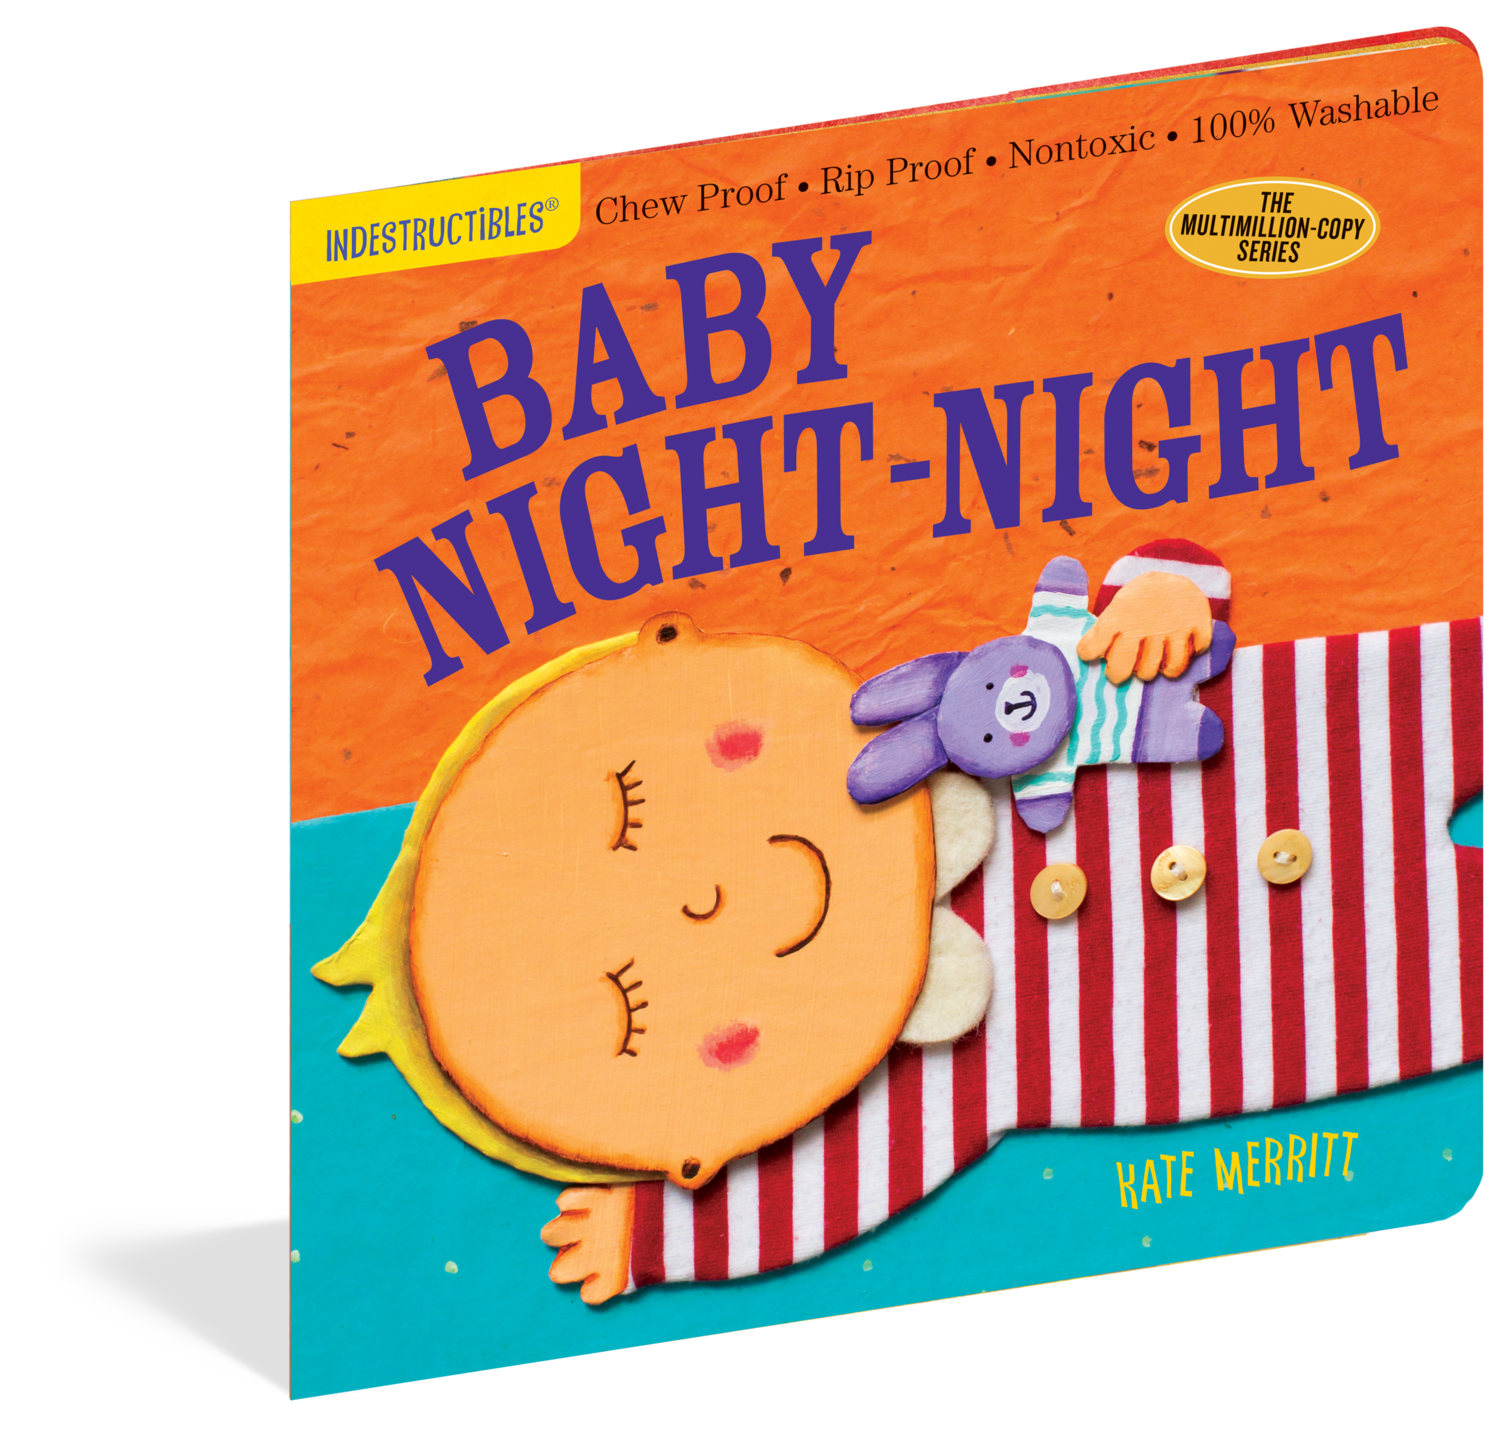 INDESTRUCTIBLES- Baby Night-Night*